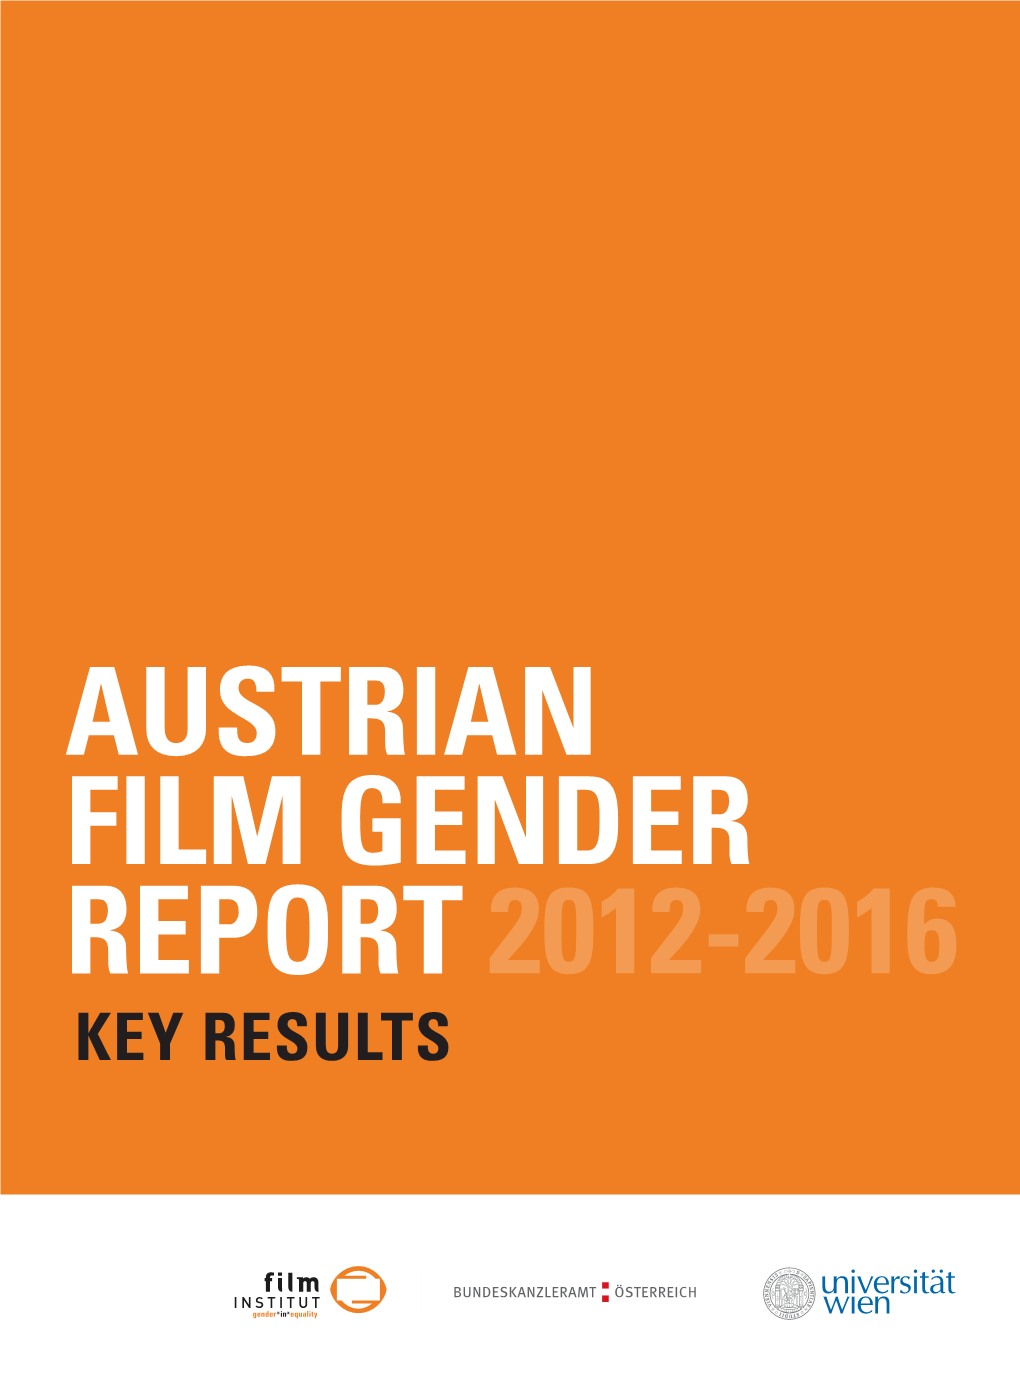 Film Gender Report 2012-2016